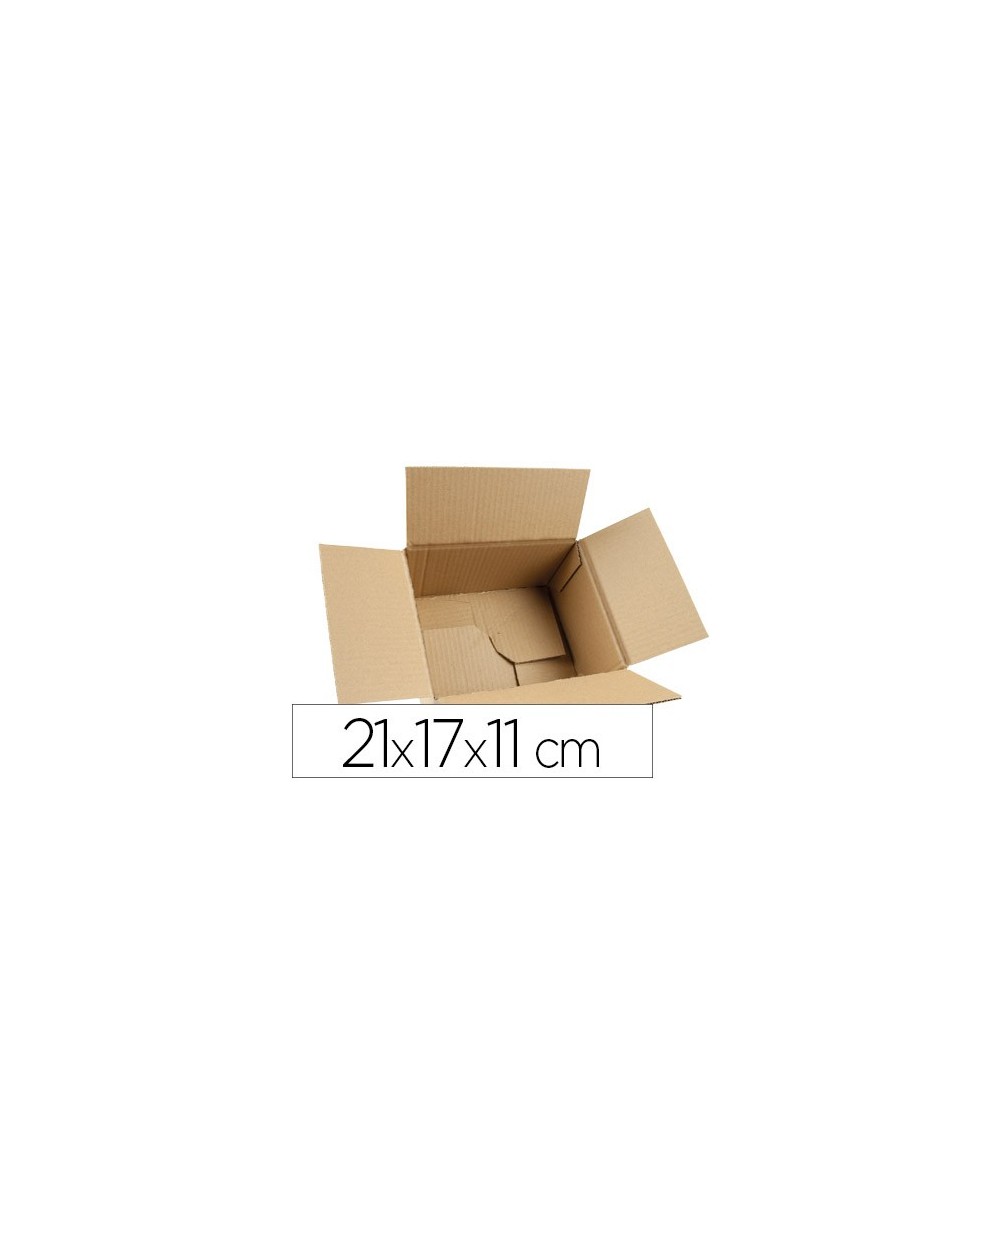 Caja para embalar q connect fondo automatico medidas 210x170x110 mm espesor carton 3 mm